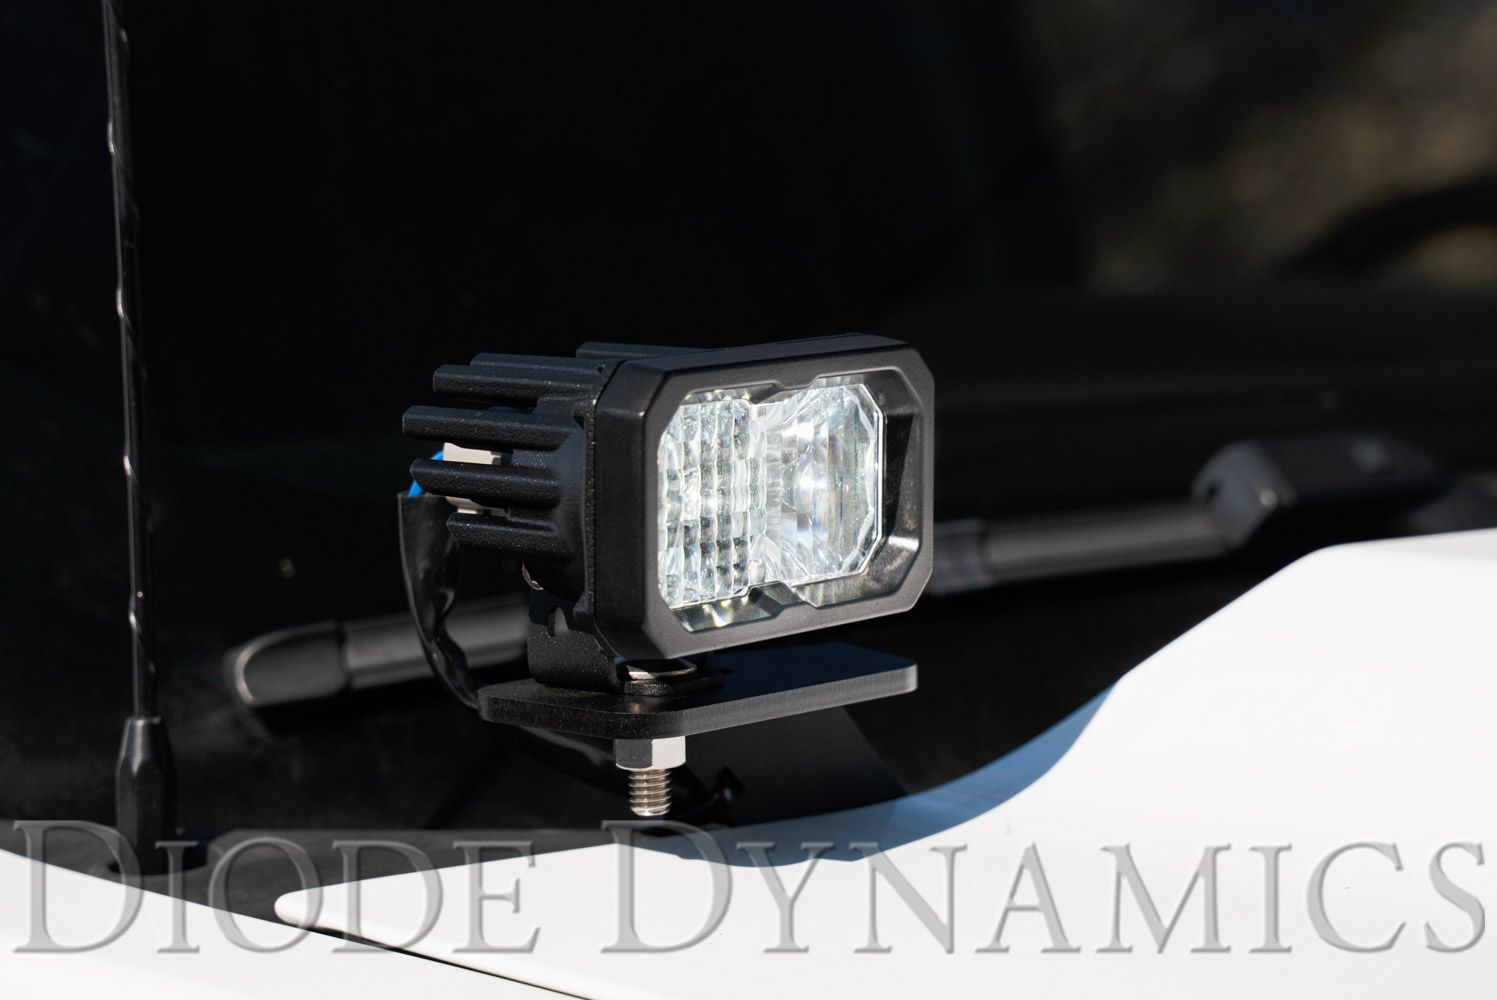 Stage Series Backlit Ditch Light Kit For 2014-2019 GMC Sierra 1500